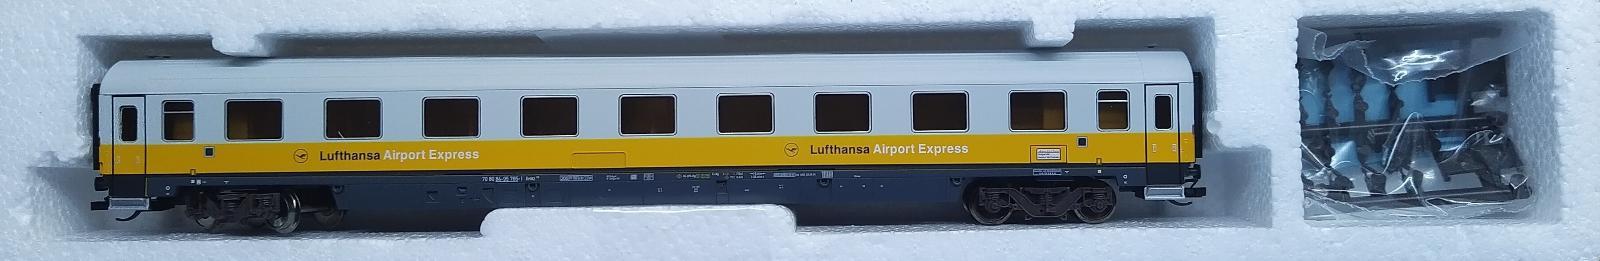 Rychlíkový vůz Airport Express, TILLIG 13540 Lufthansa, TT 1:120 (02)